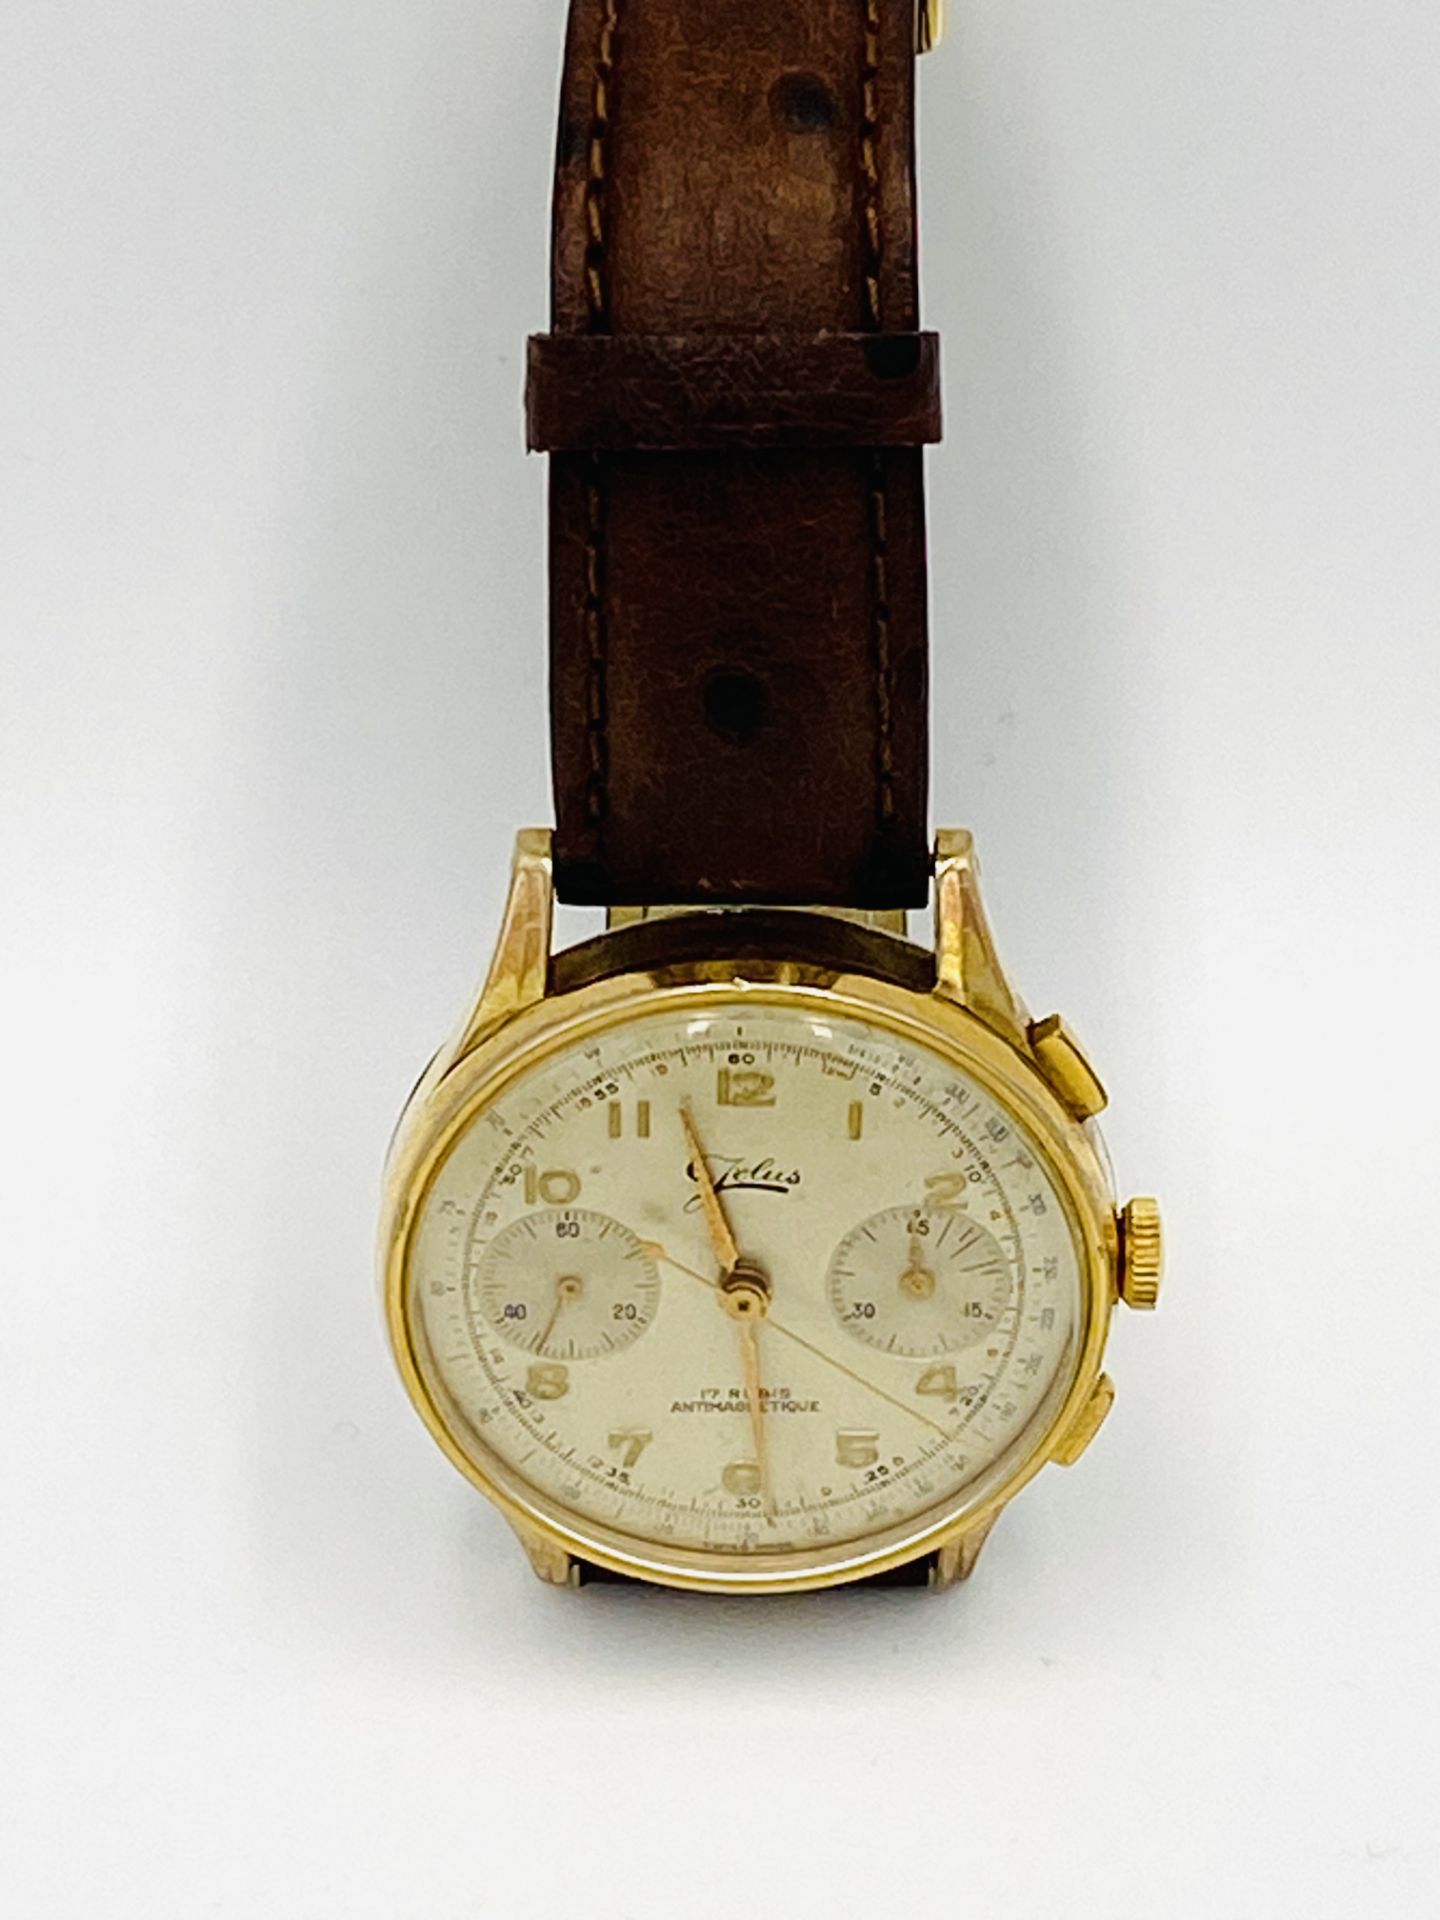 Jolus gents chronograph wrist watch - Image 4 of 8